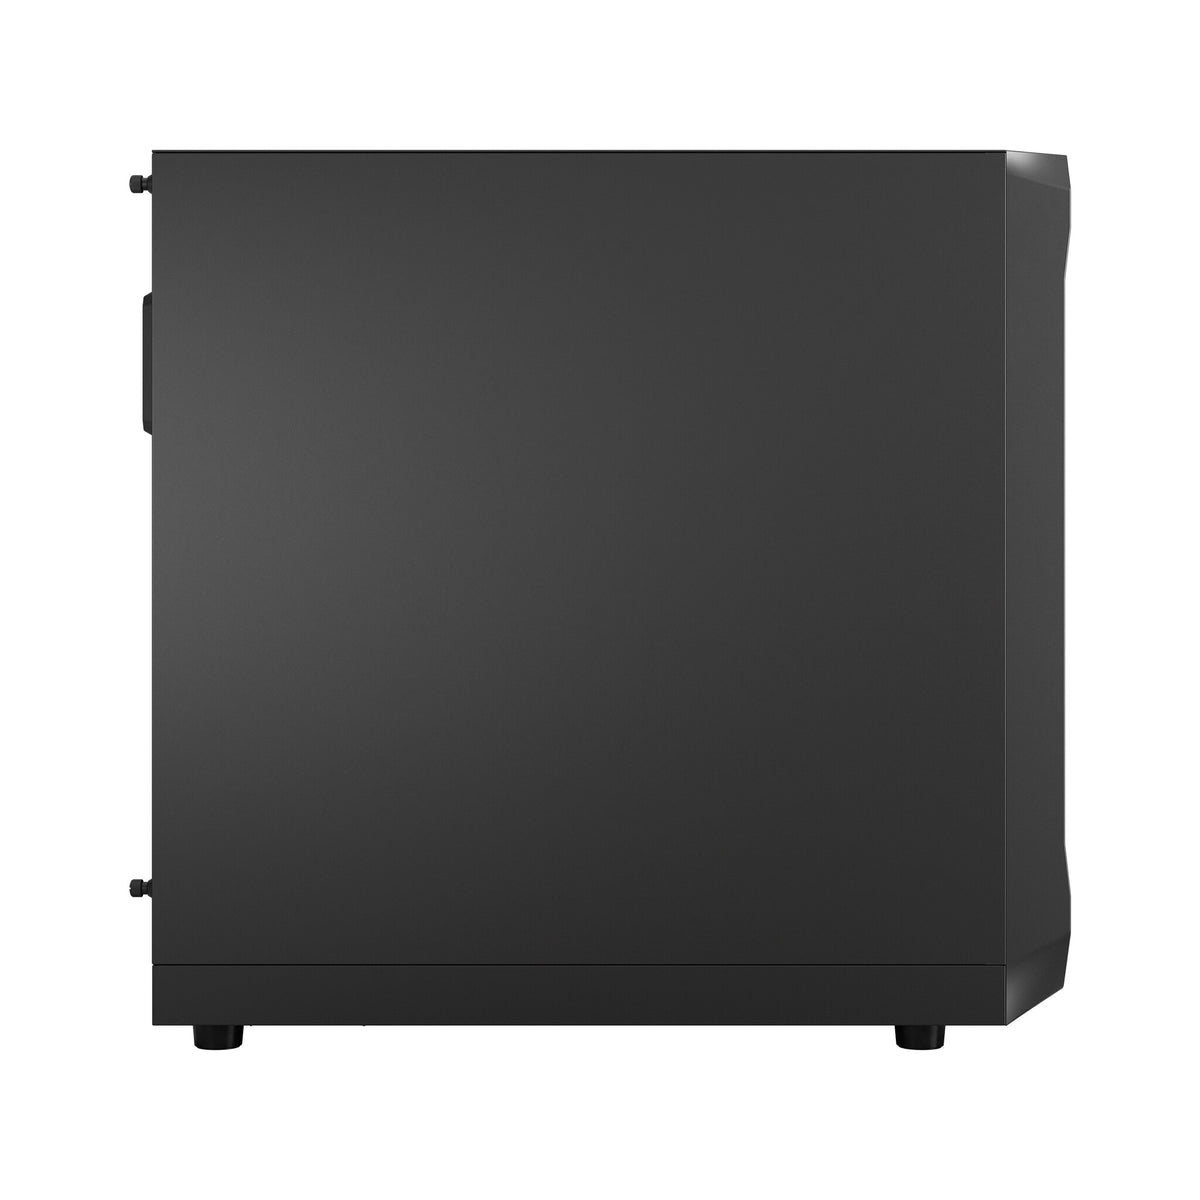 Fractal Design Focus 2 - ATX Mid Tower Case in Black